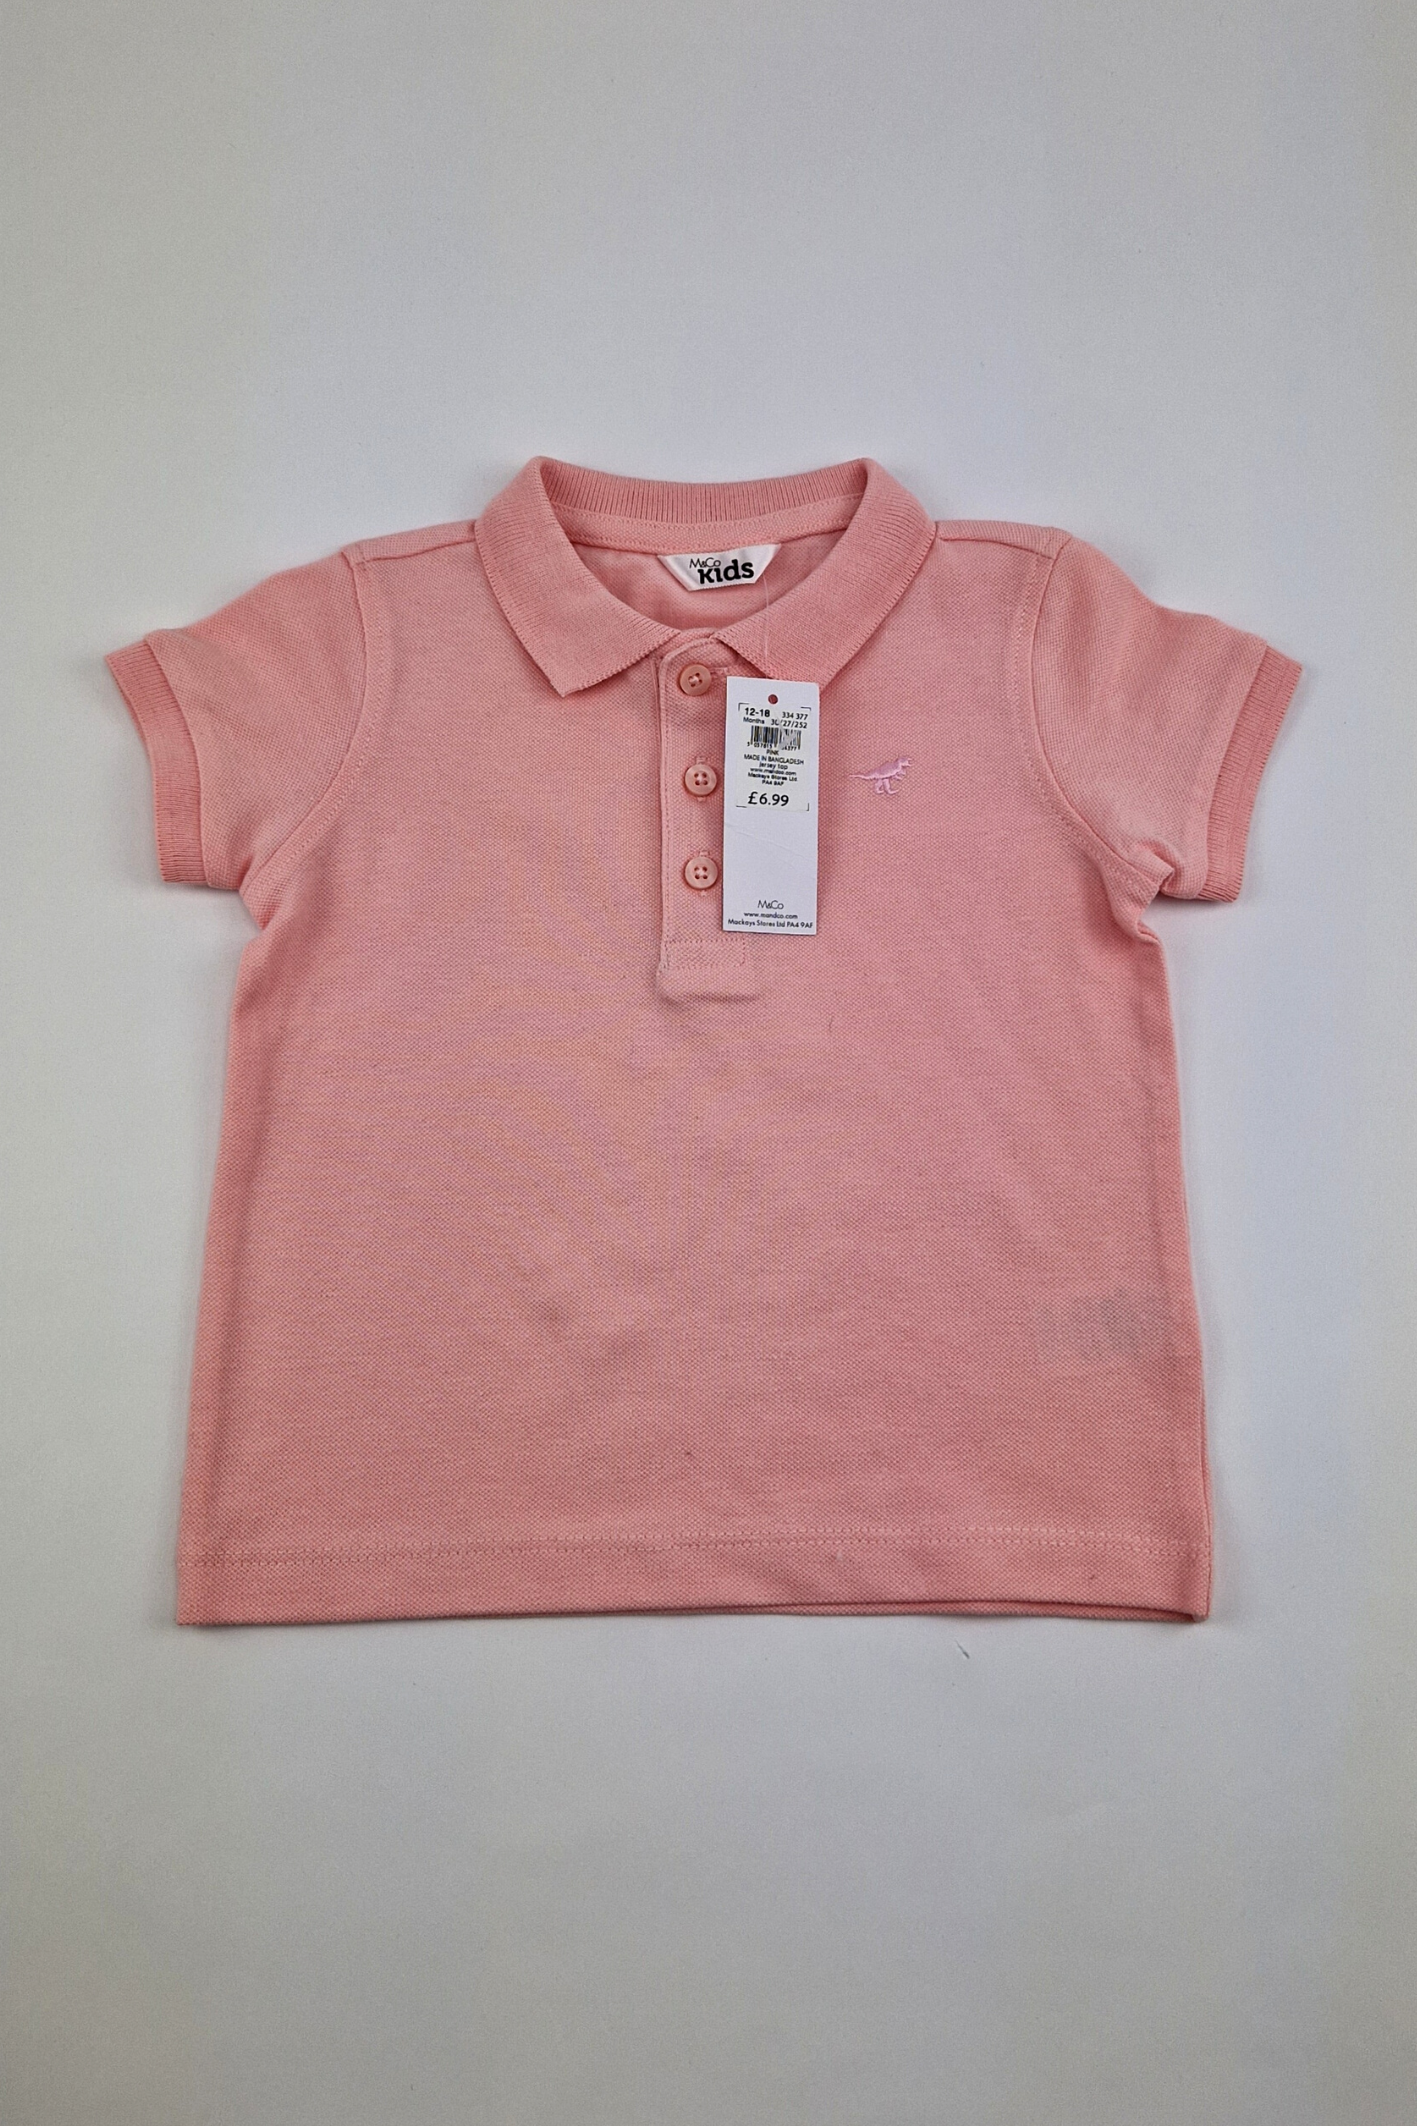 12-18m - 100% Cotton Pink Polo Shirt (M & Co.)